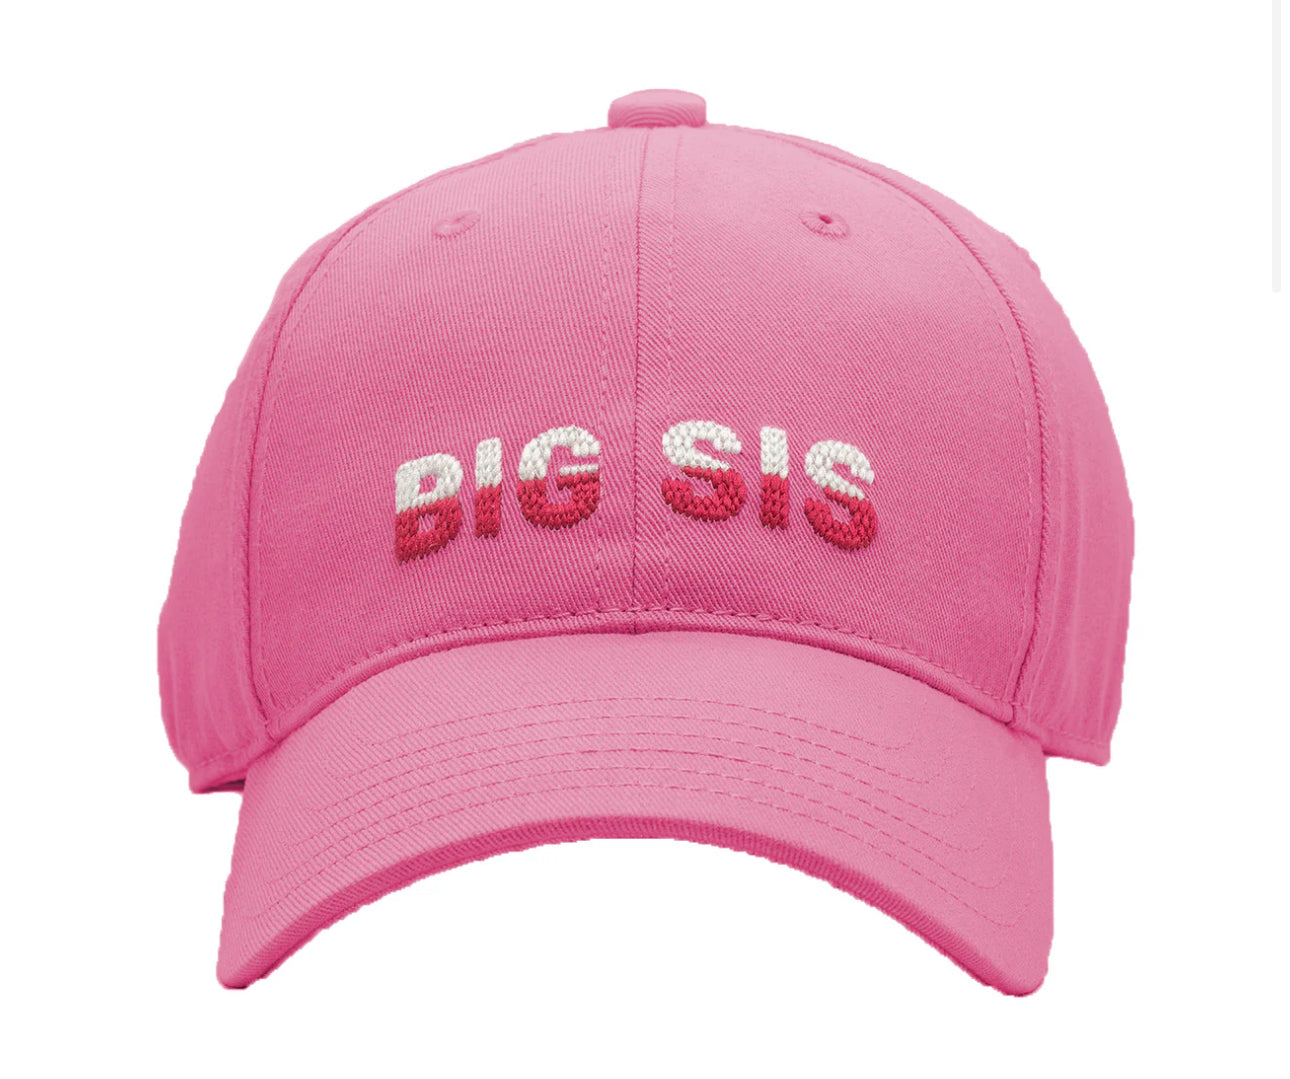 Big Sis on Hot Pink Baseball Hat